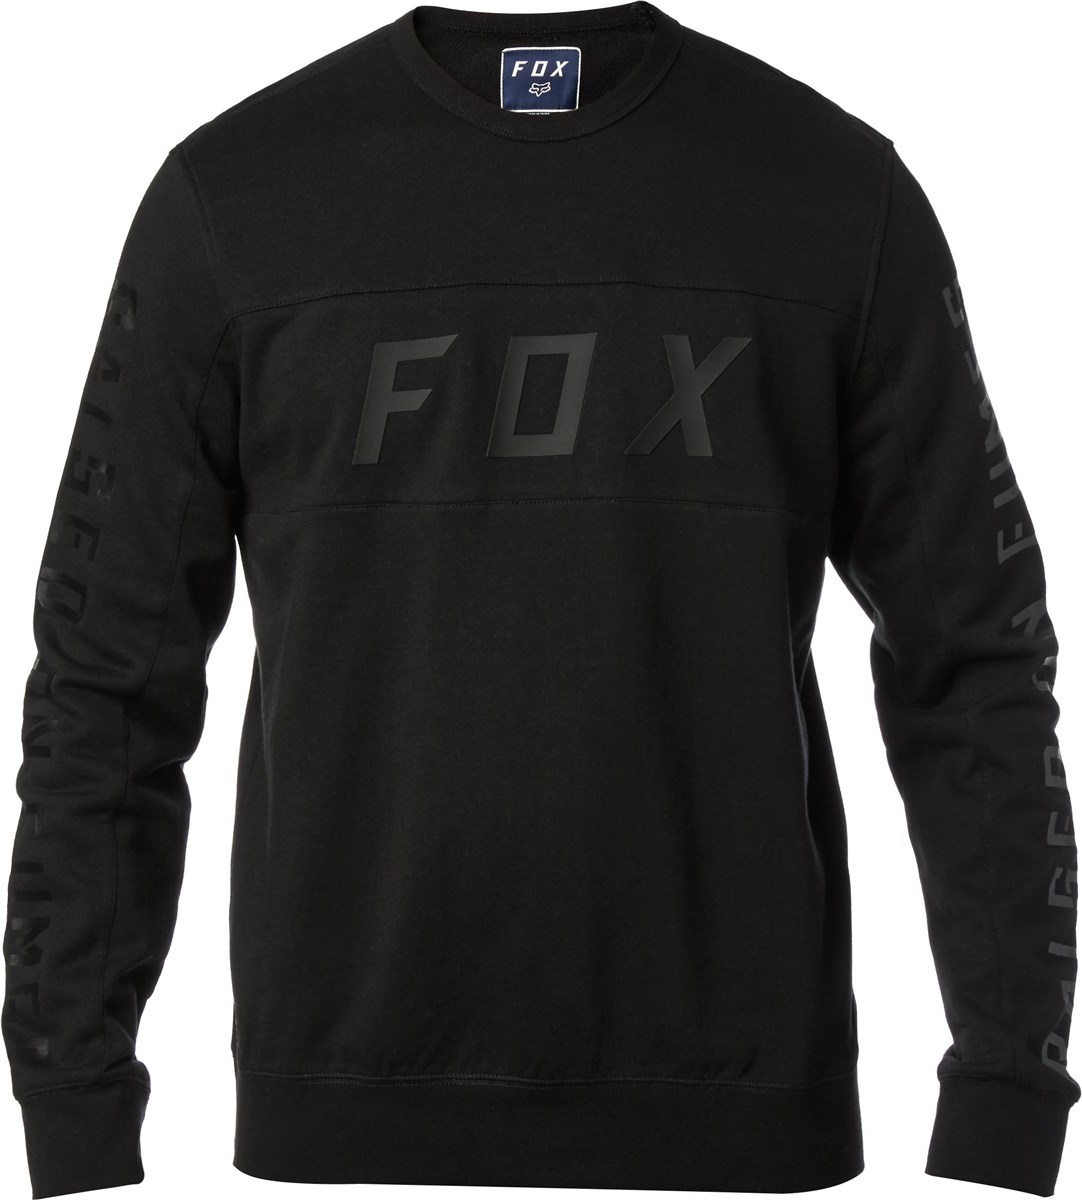 Fox Clothing Rhodes Crew Fleece product image